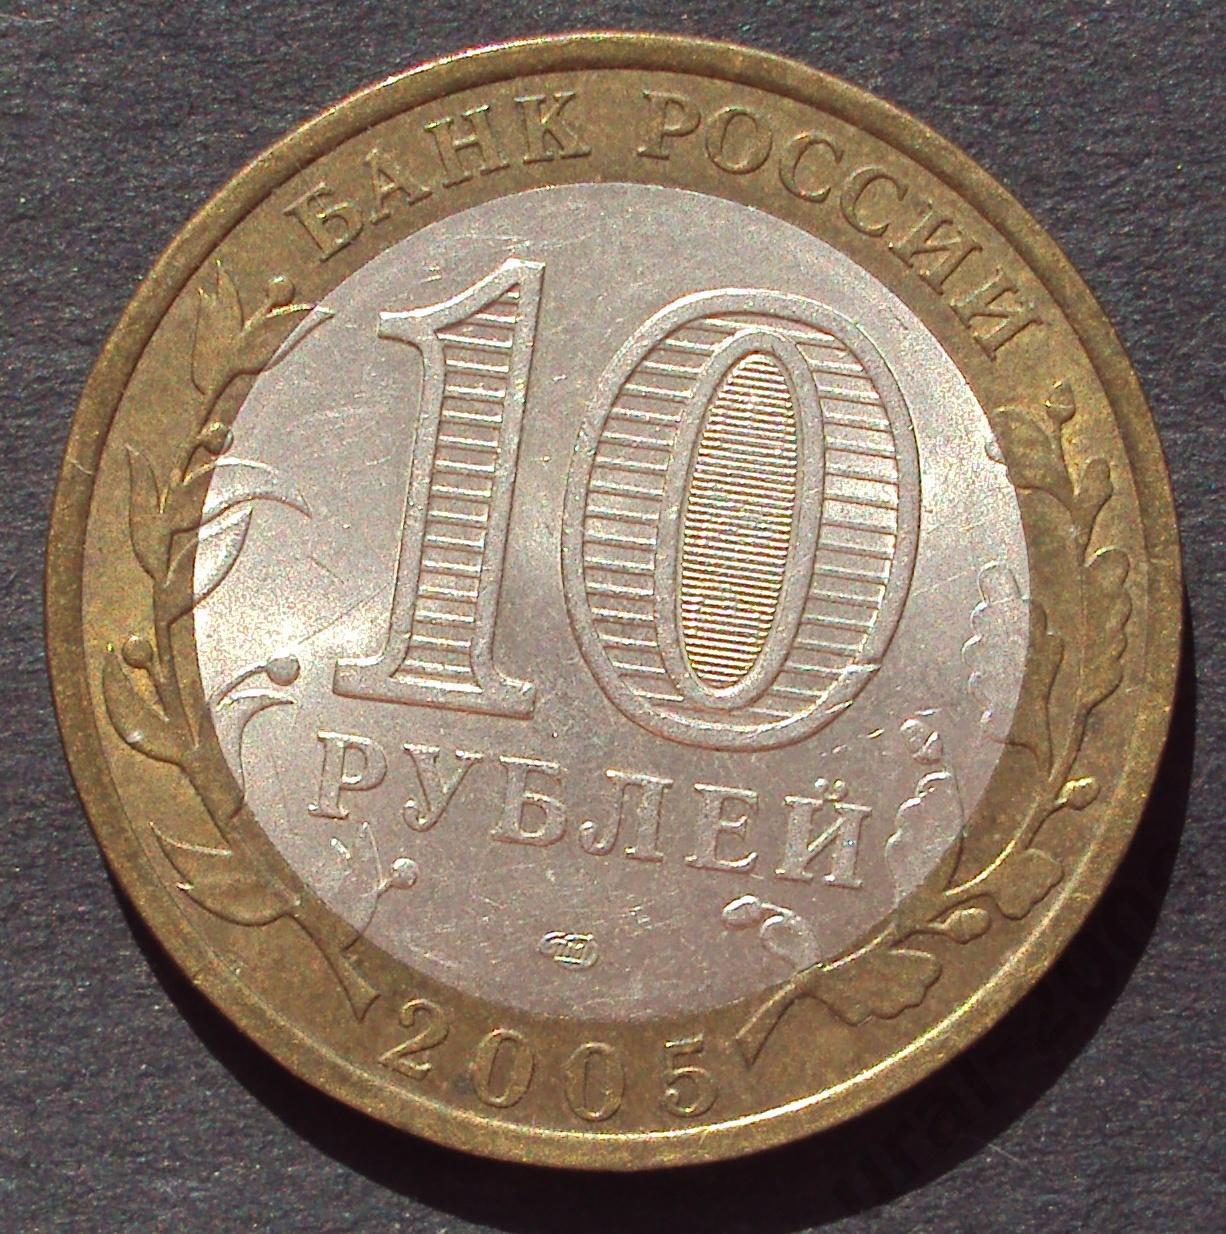 10 рублей 2005 год! 60 лет победы. СПМД. (А-31).